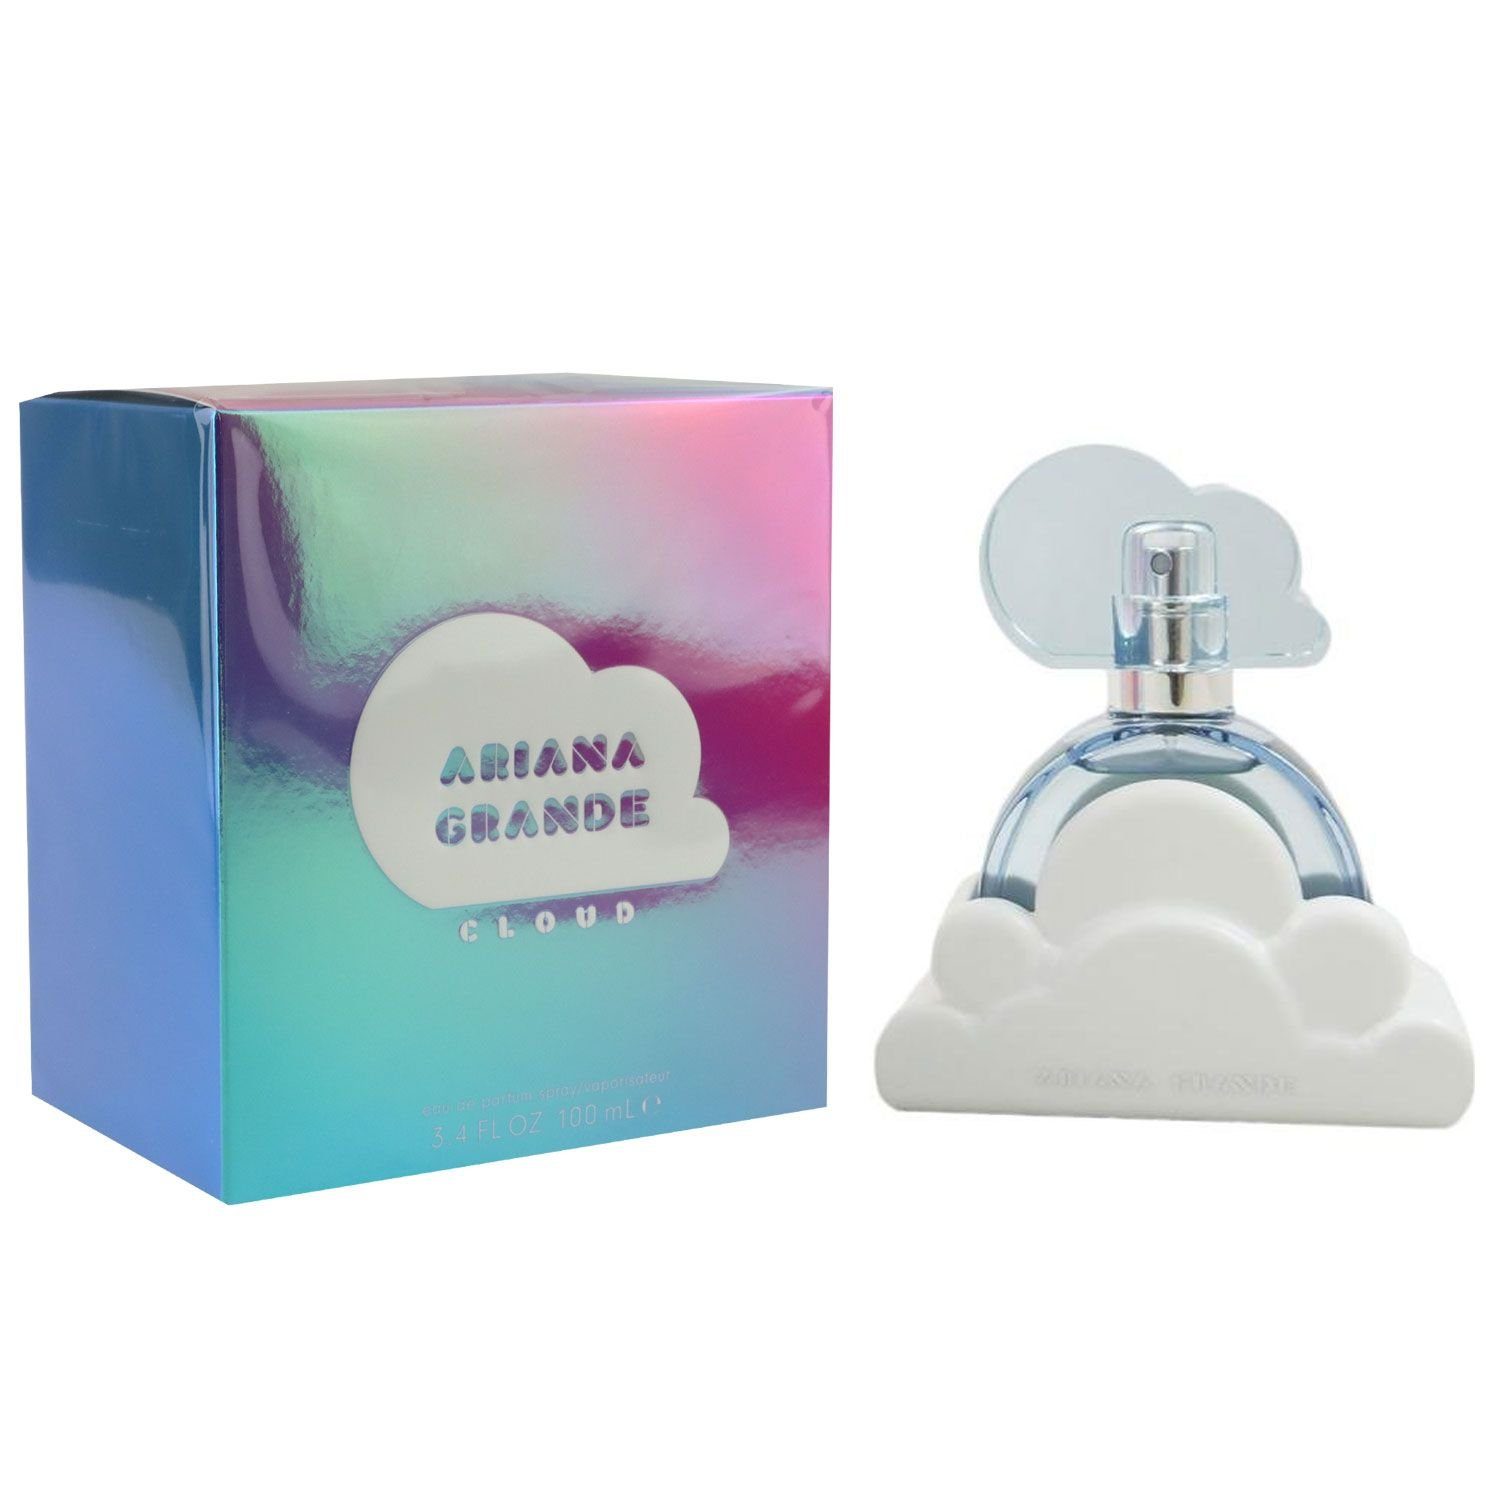 ARIANA GRANDE Eau de Parfum Cloud 100 ml